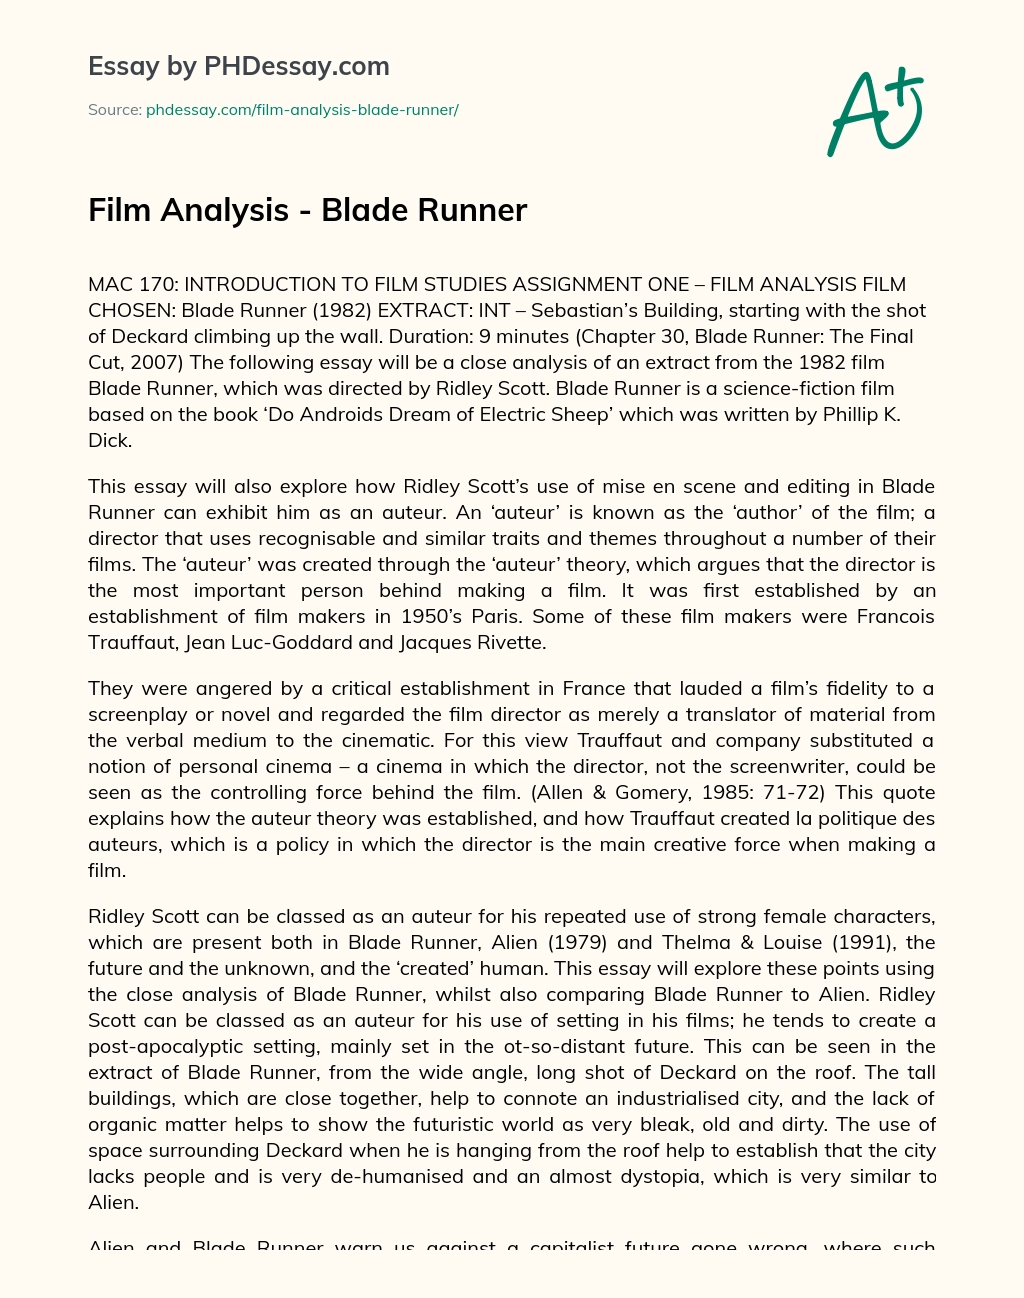 Film Analysis – Blade Runner essay